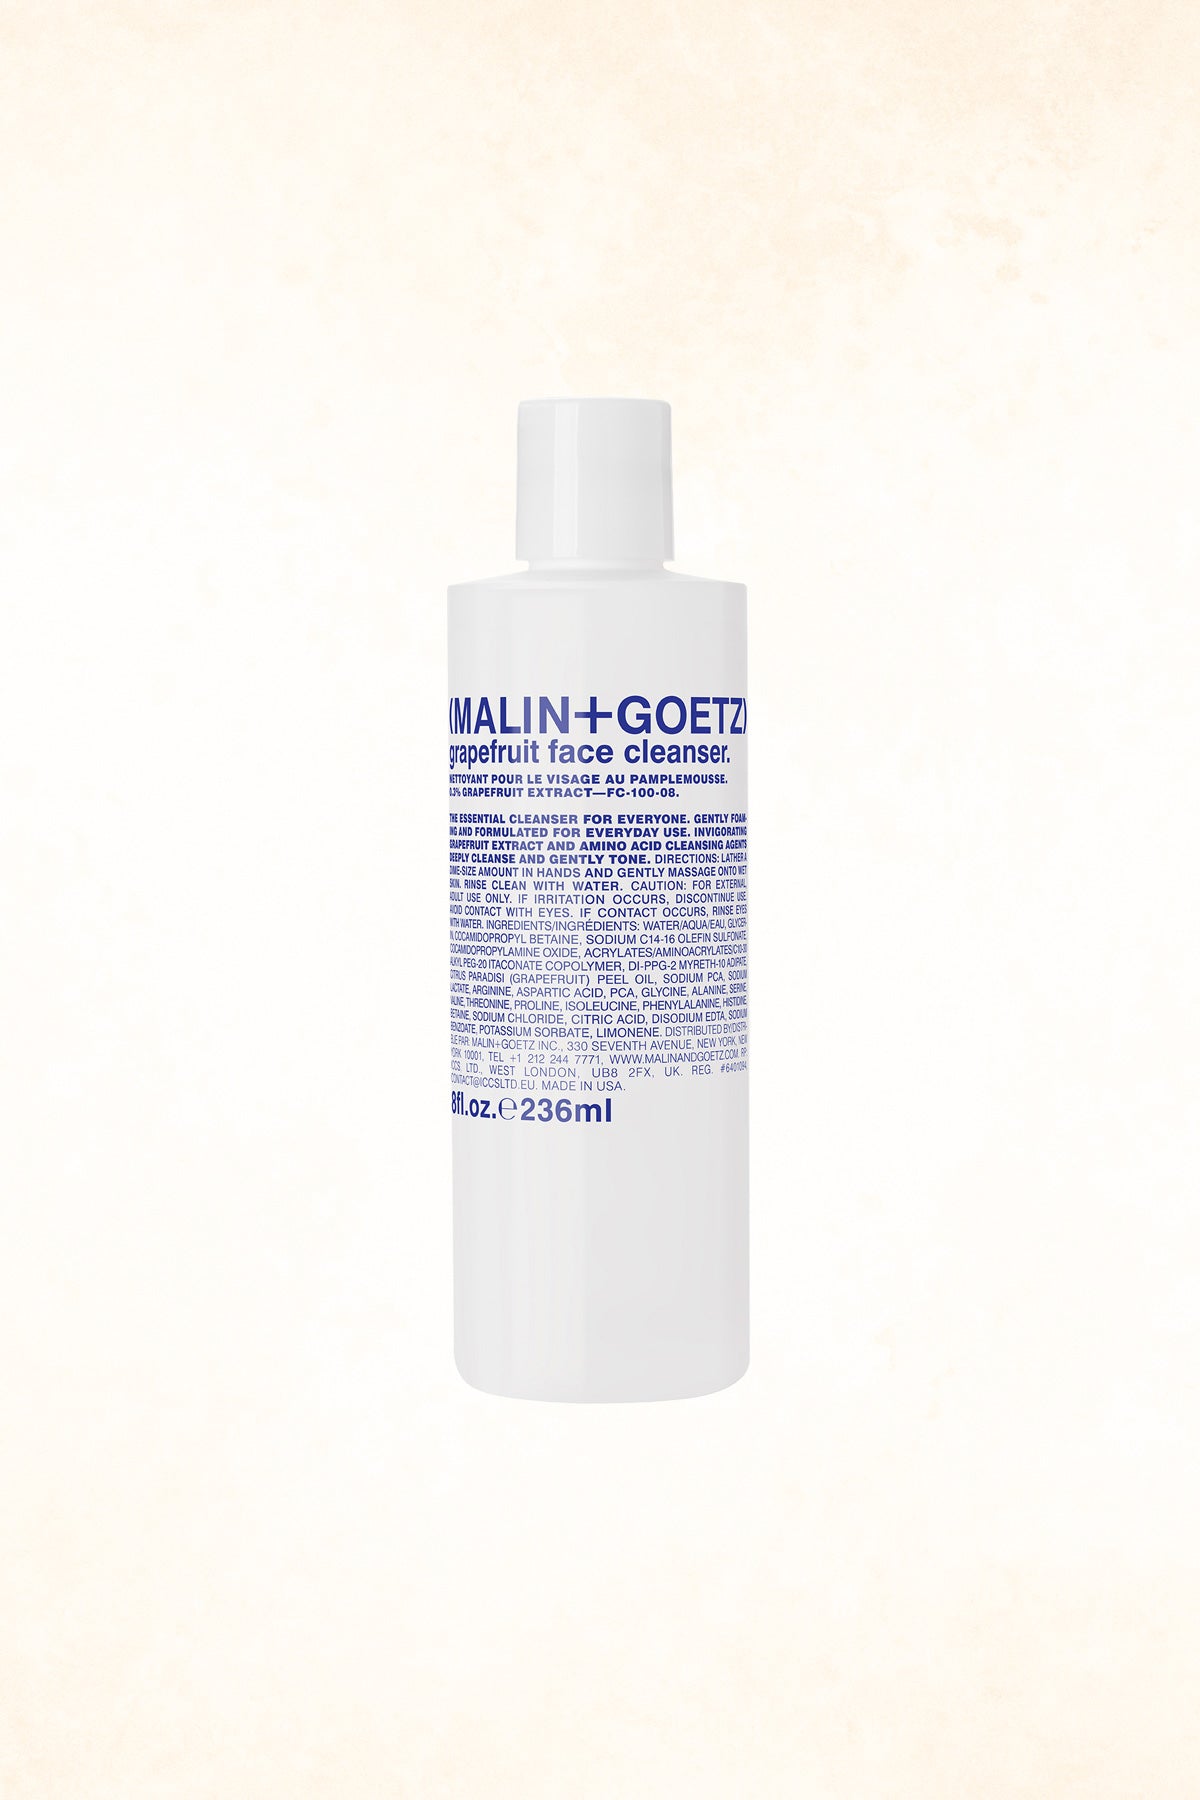 Malin+Goetz – Grapefruit Face Cleanser 8 oz / 236 ml